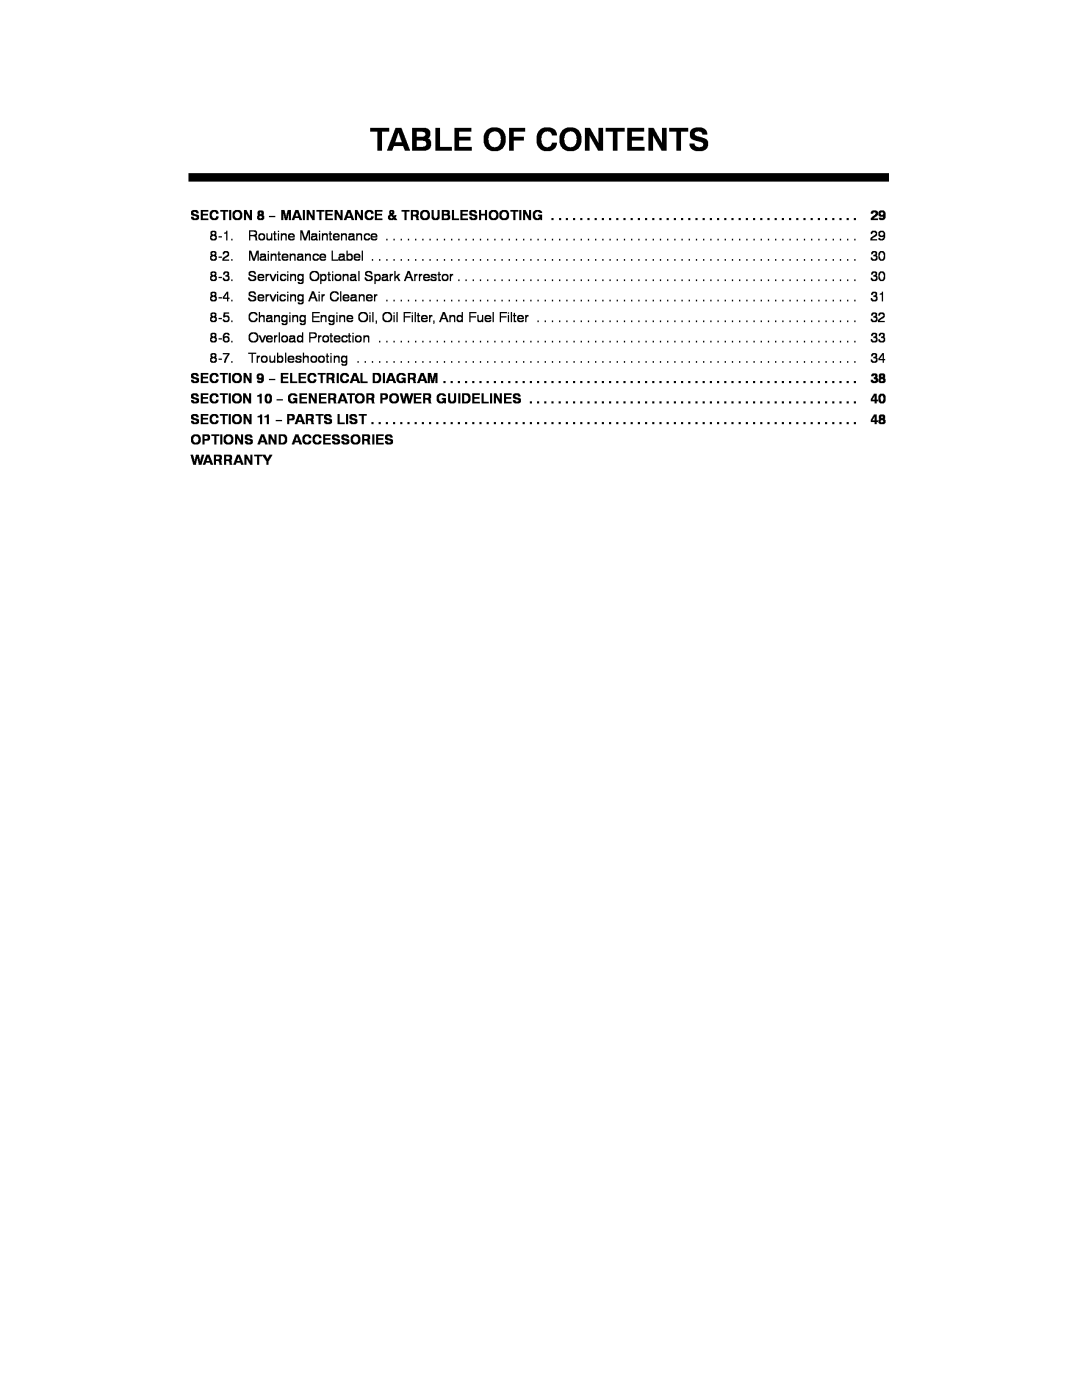 Miller Electric 301 G Table Of Contents, Maintenance Label 8-3. Servicing Optional Spark Arrestor, Servicing Air Cleaner 